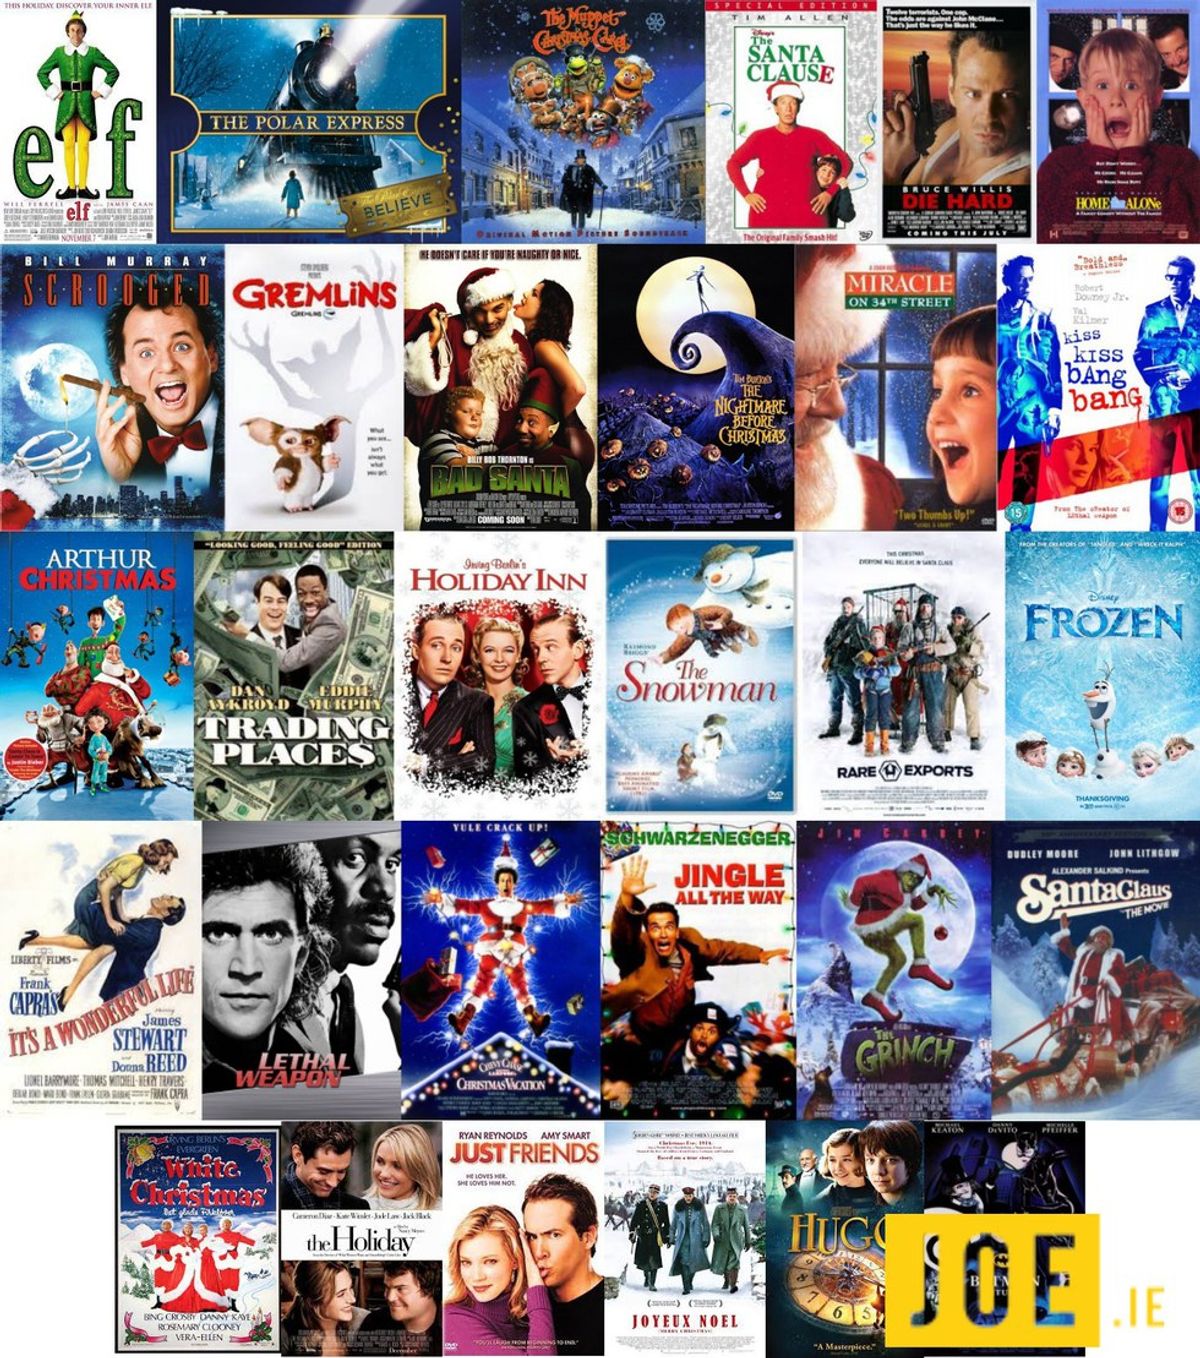 My Top 5 Christmas Movies